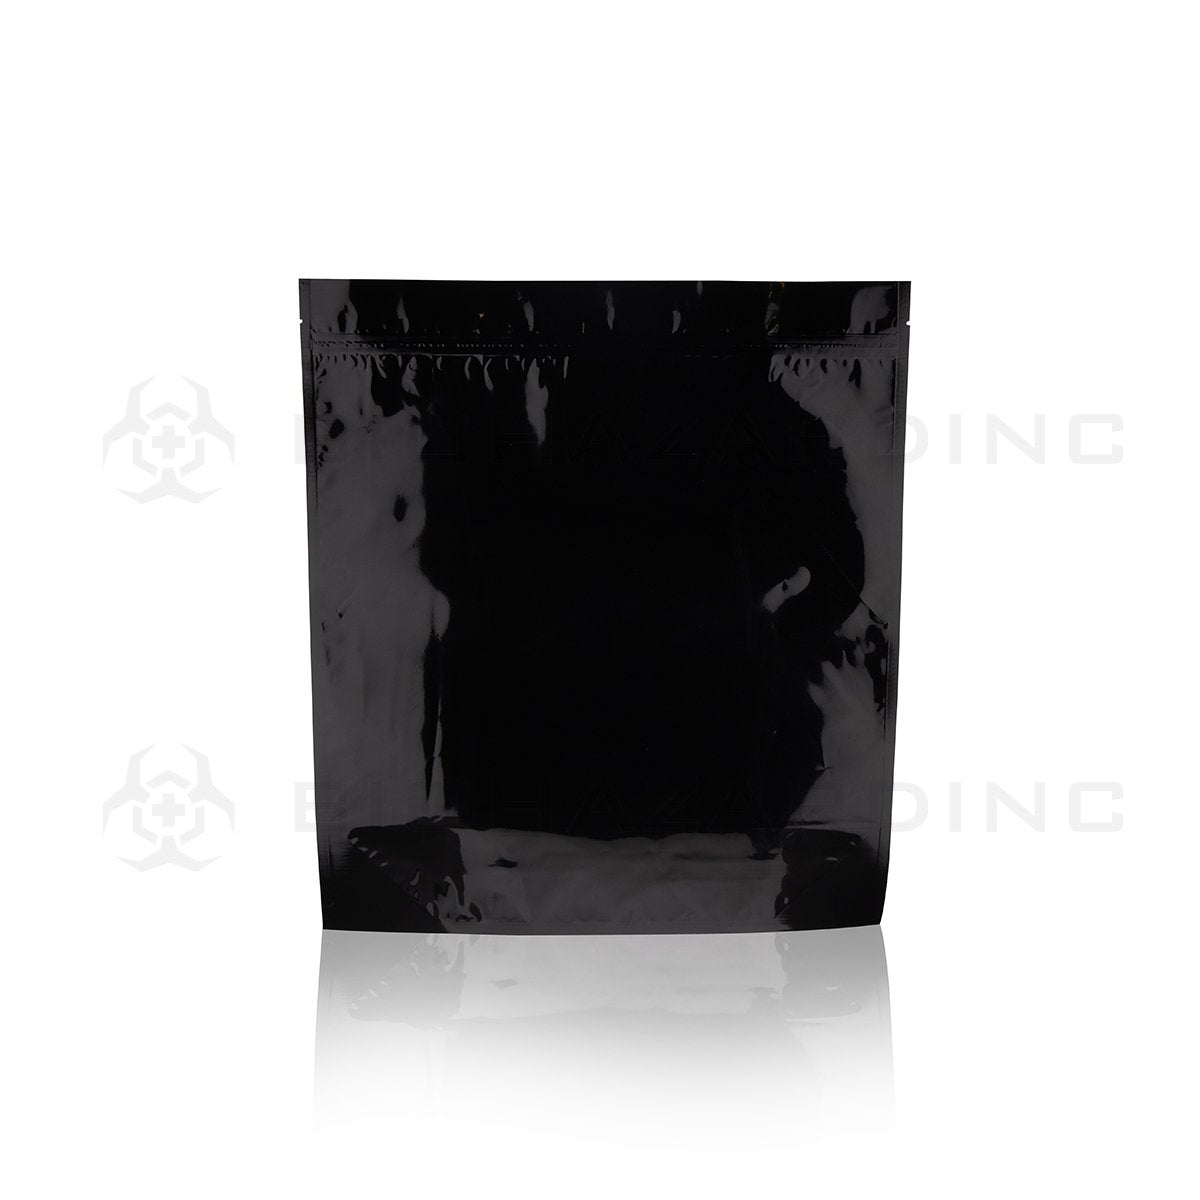 Tamper Evident | Glossy Black Mylar Bags - Various Sizes Mylar Bag Biohazard Inc 448g - 1lb - 100 Count - No Tear Notch  